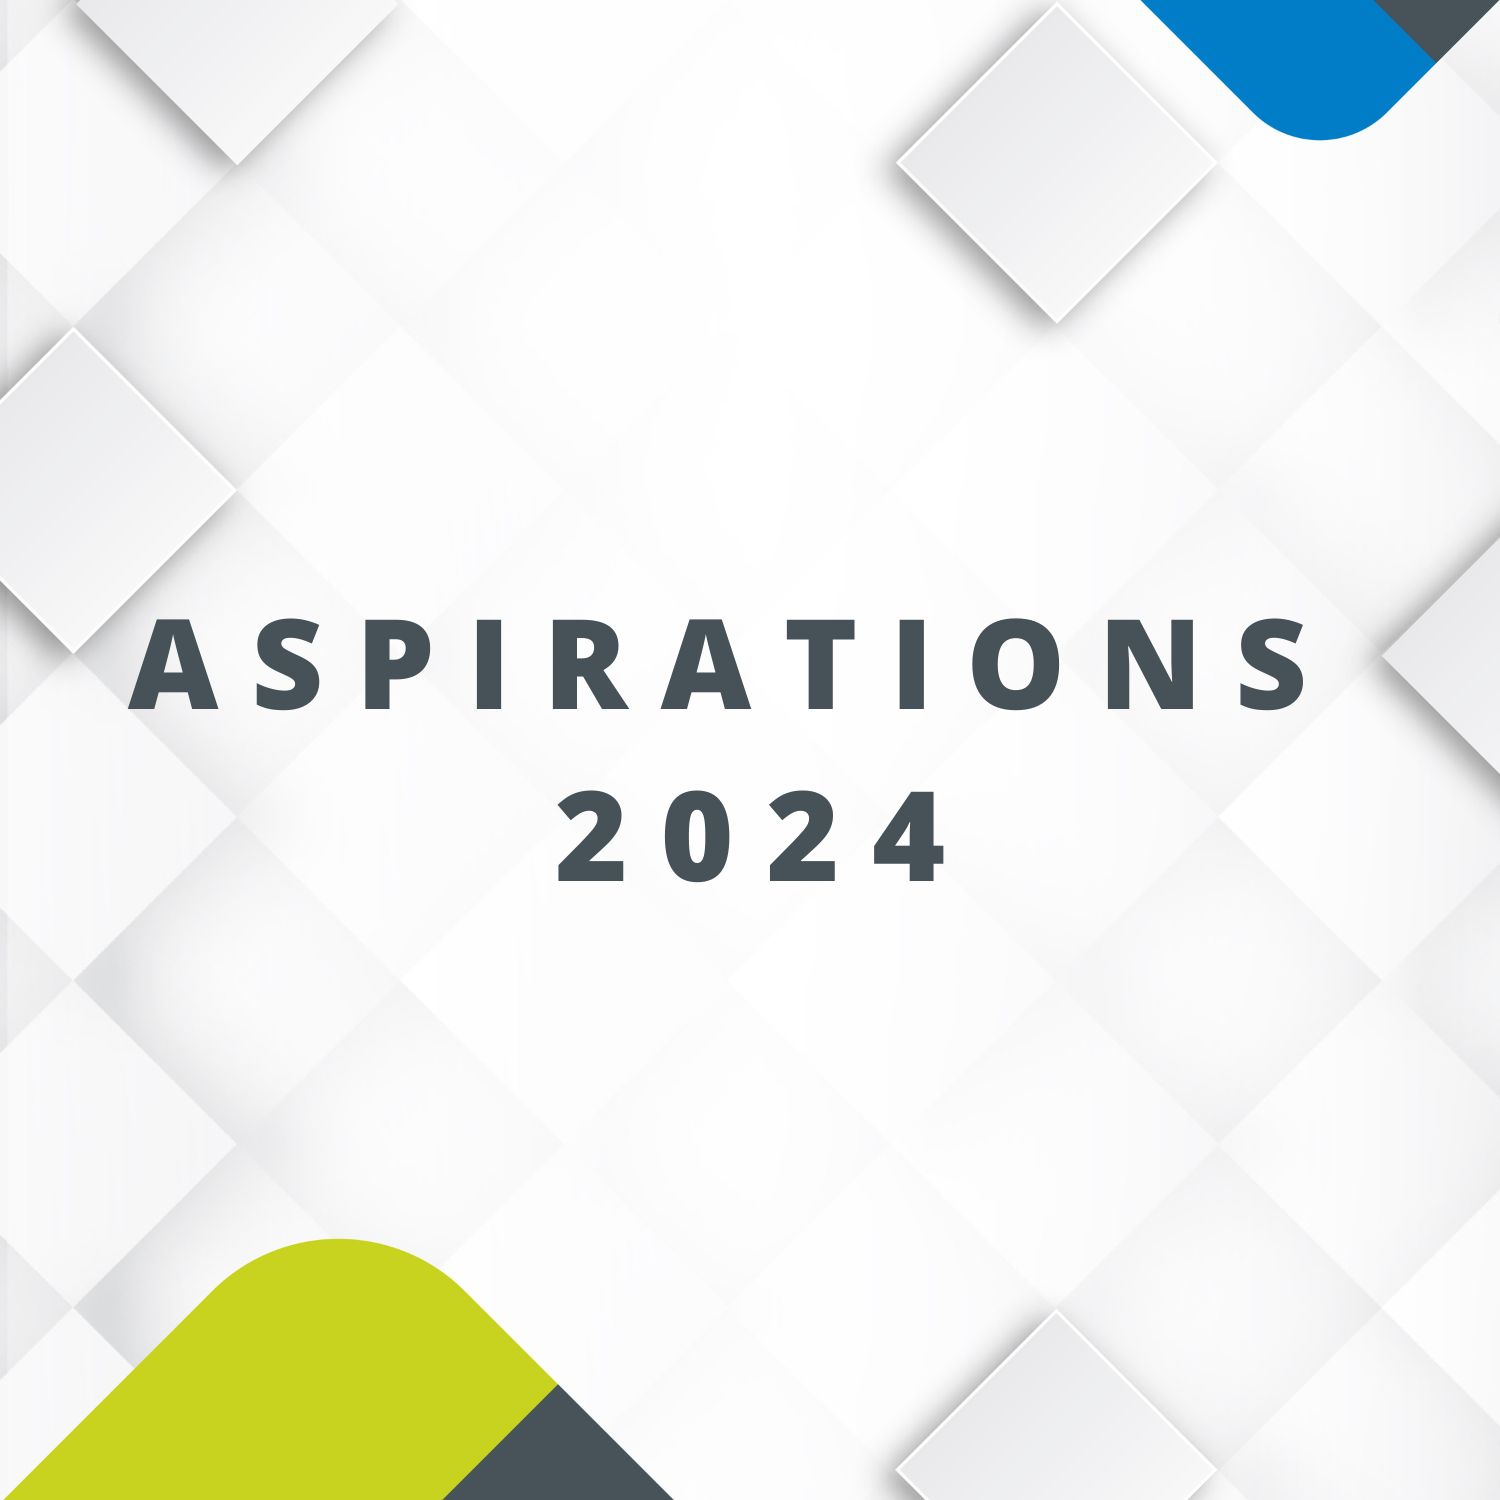 Aspirations 2024 